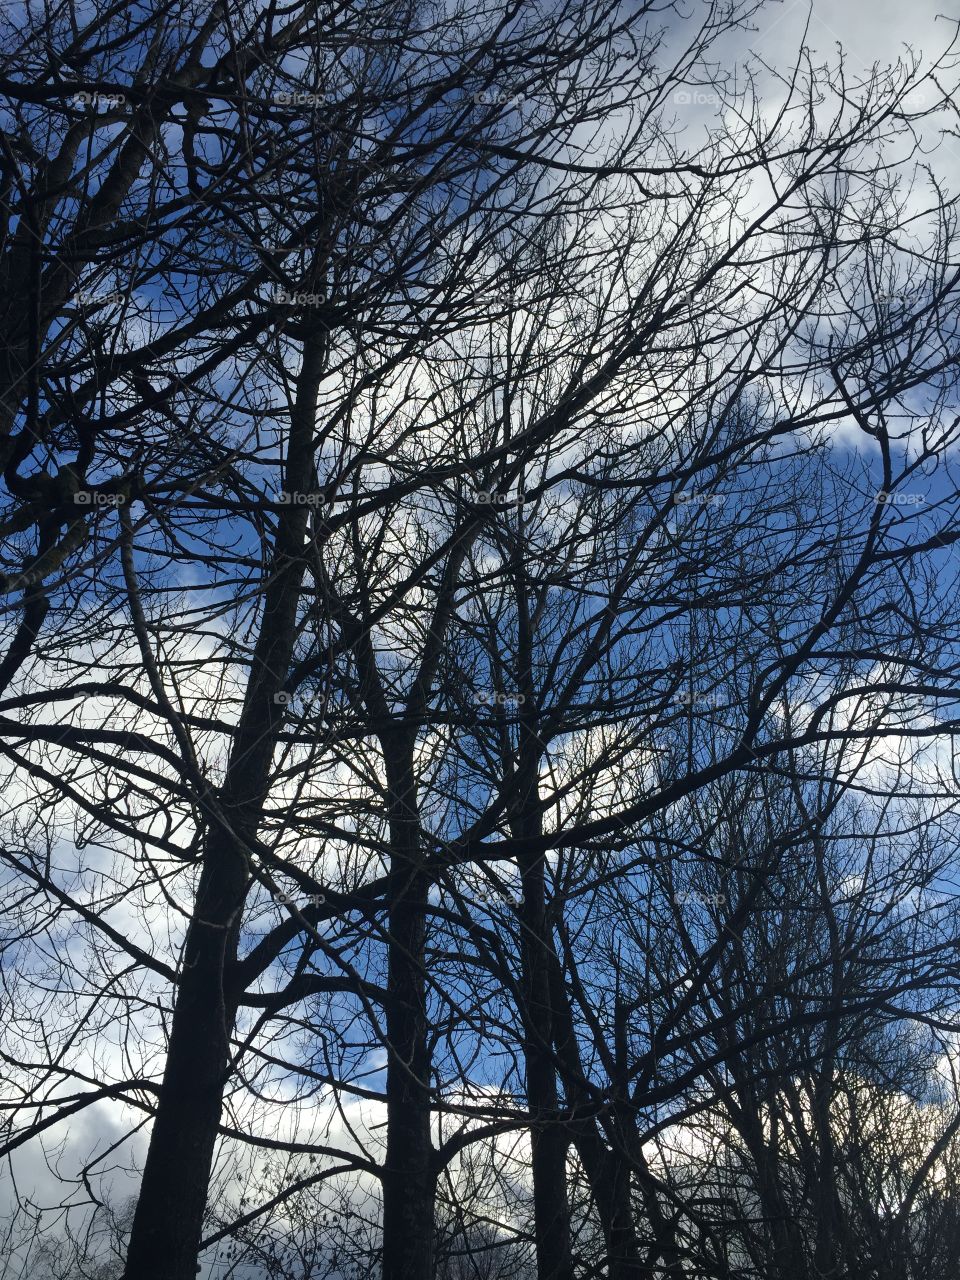 Barren tree against beautiful sky
